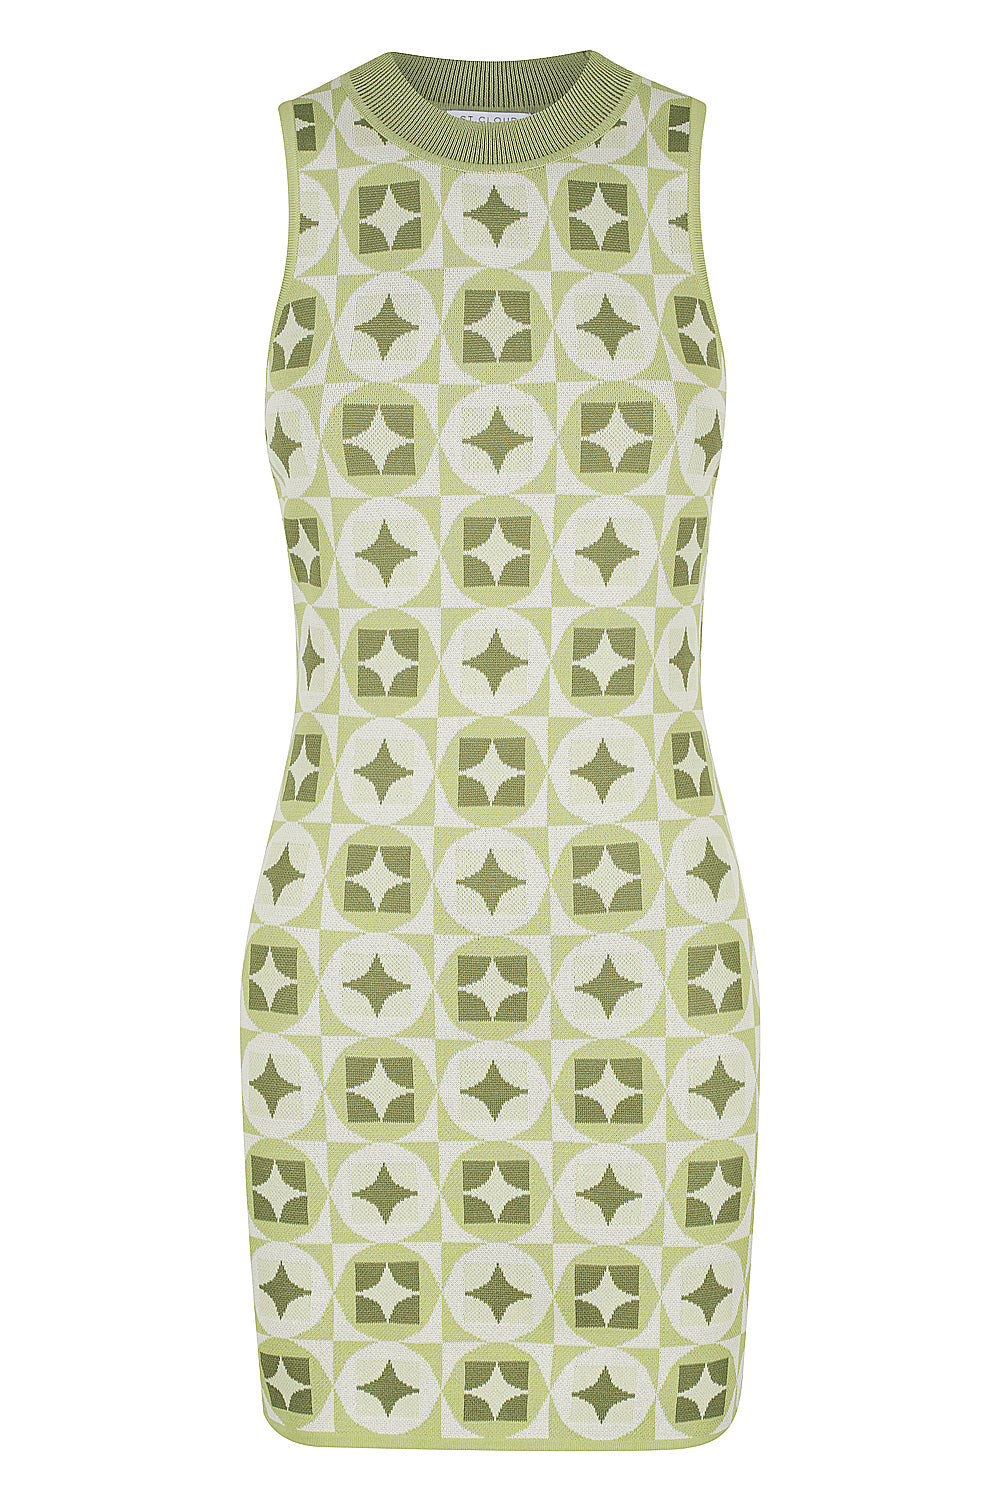 Marrakesh Mosaic Mini Knit Dress - Citrus Green Multi